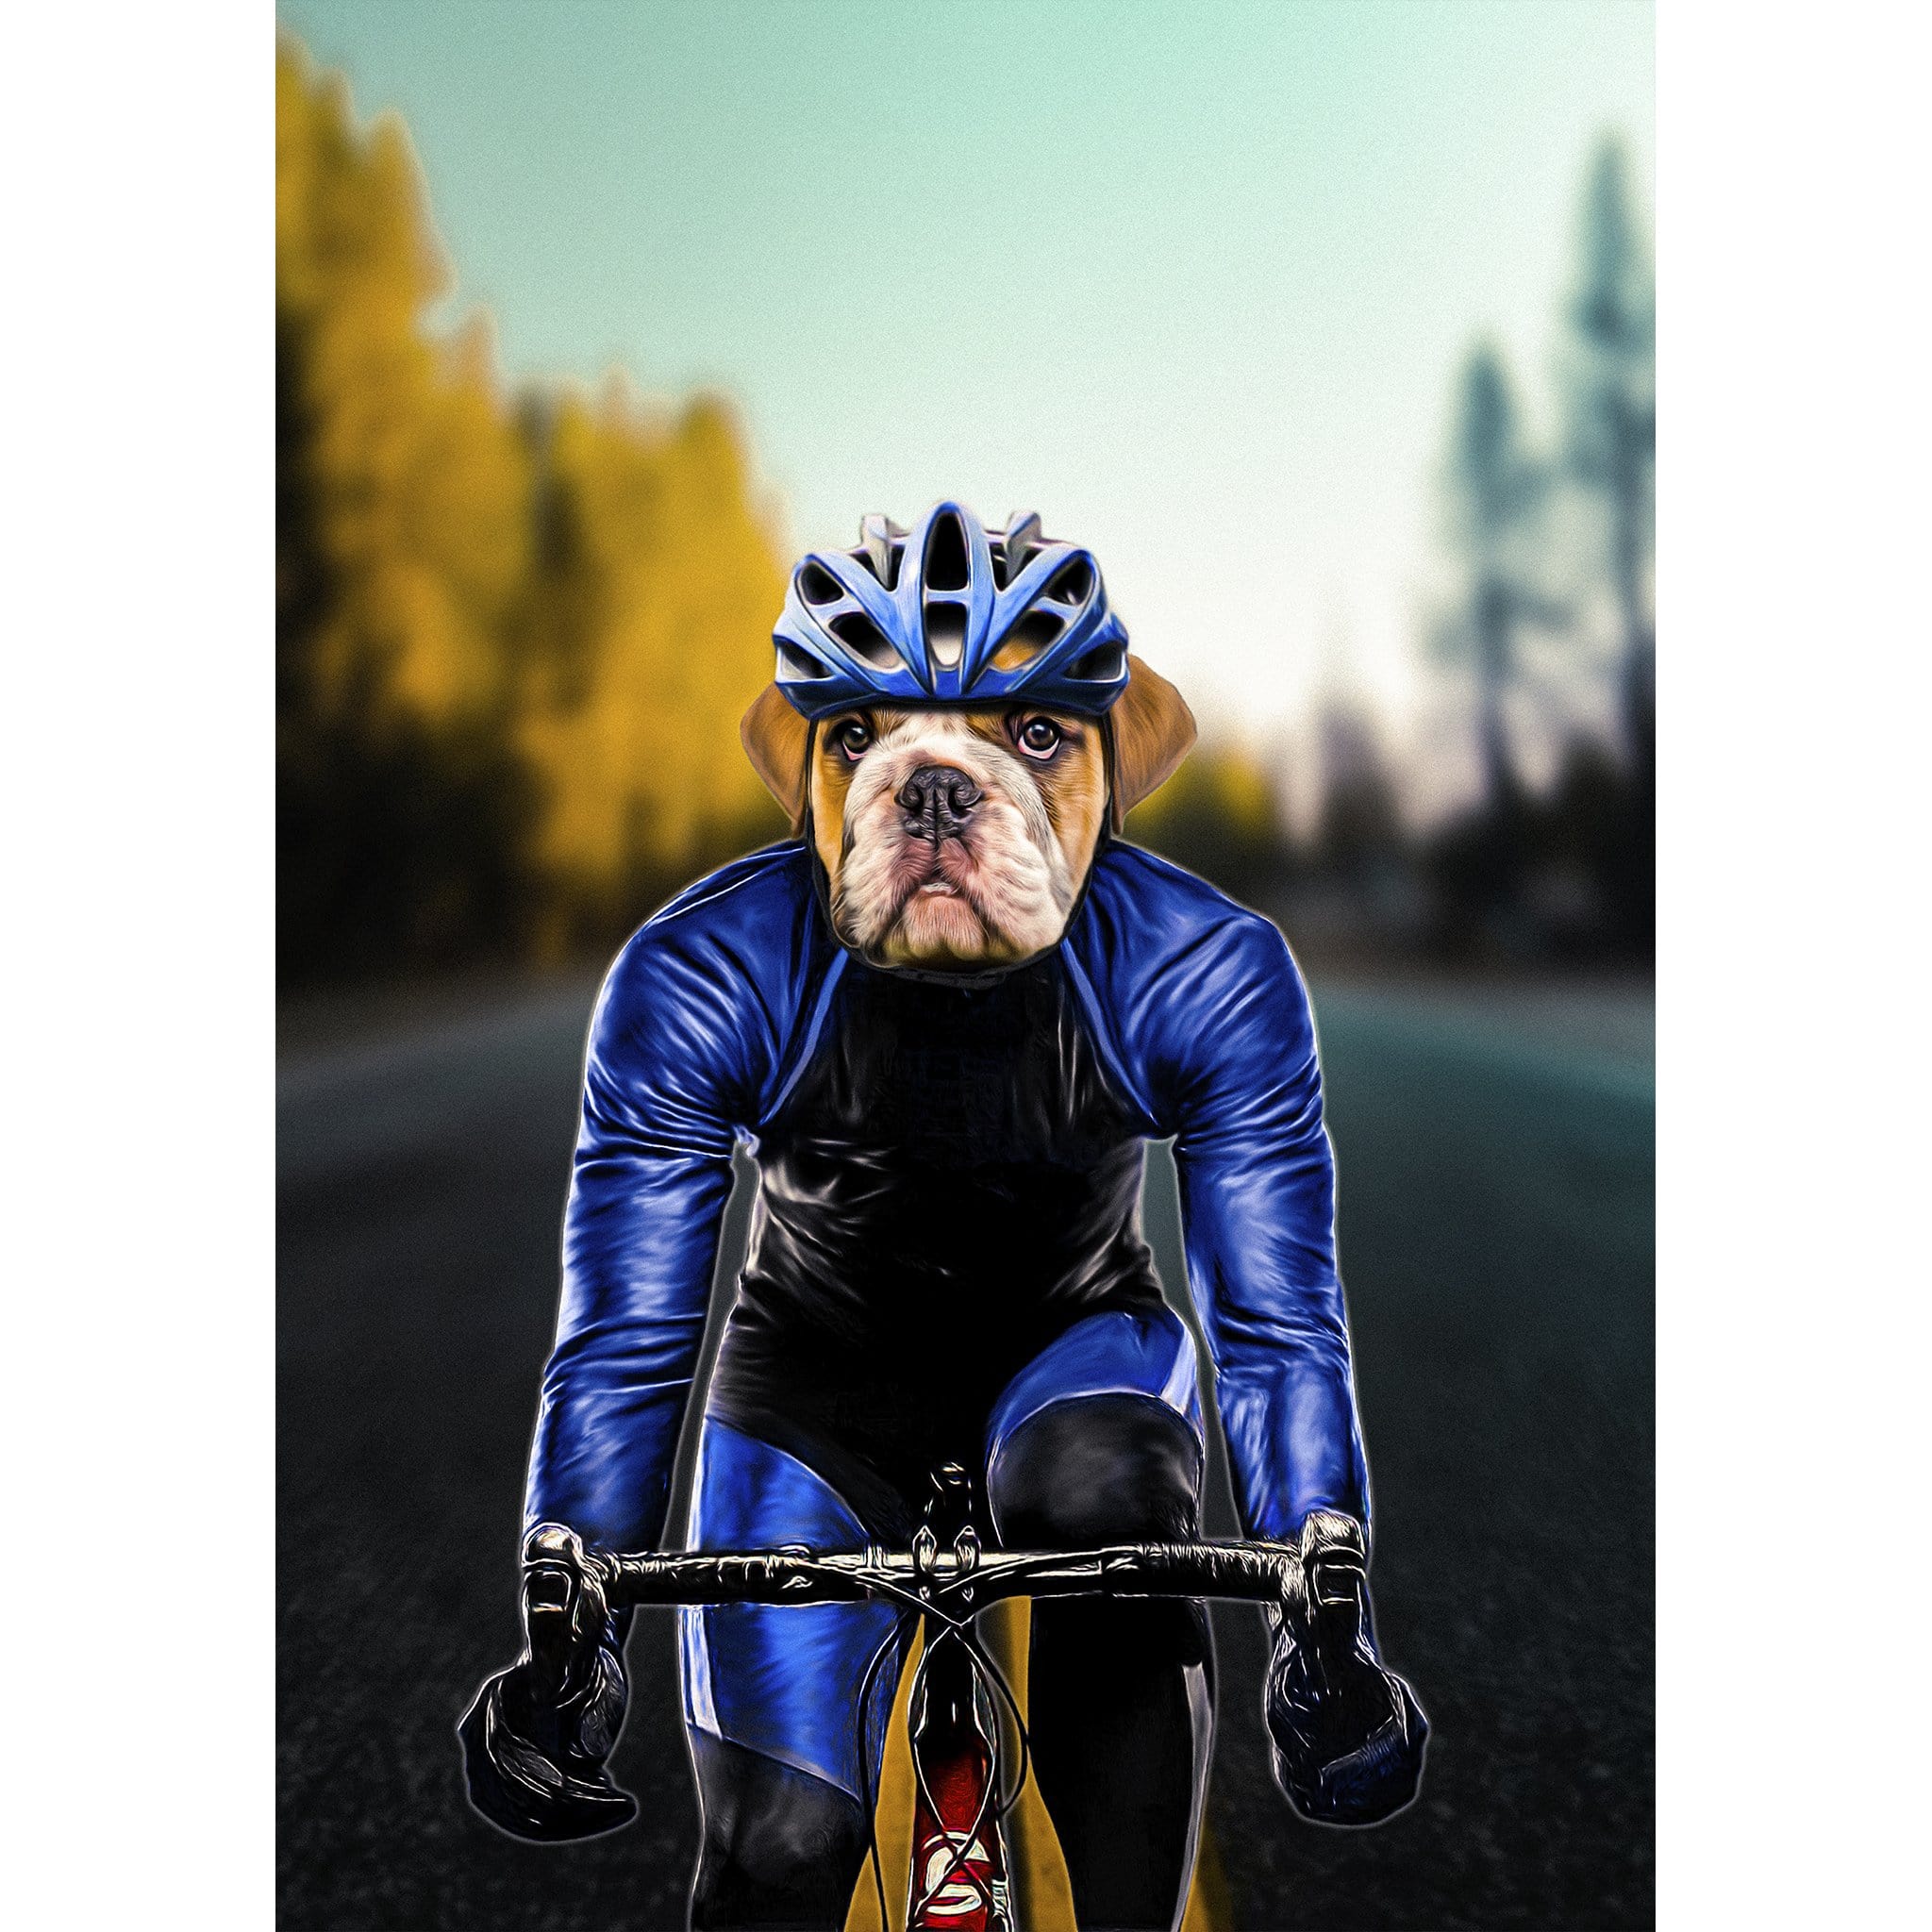 &#39;The Male Cyclist&#39; Digital Portrait